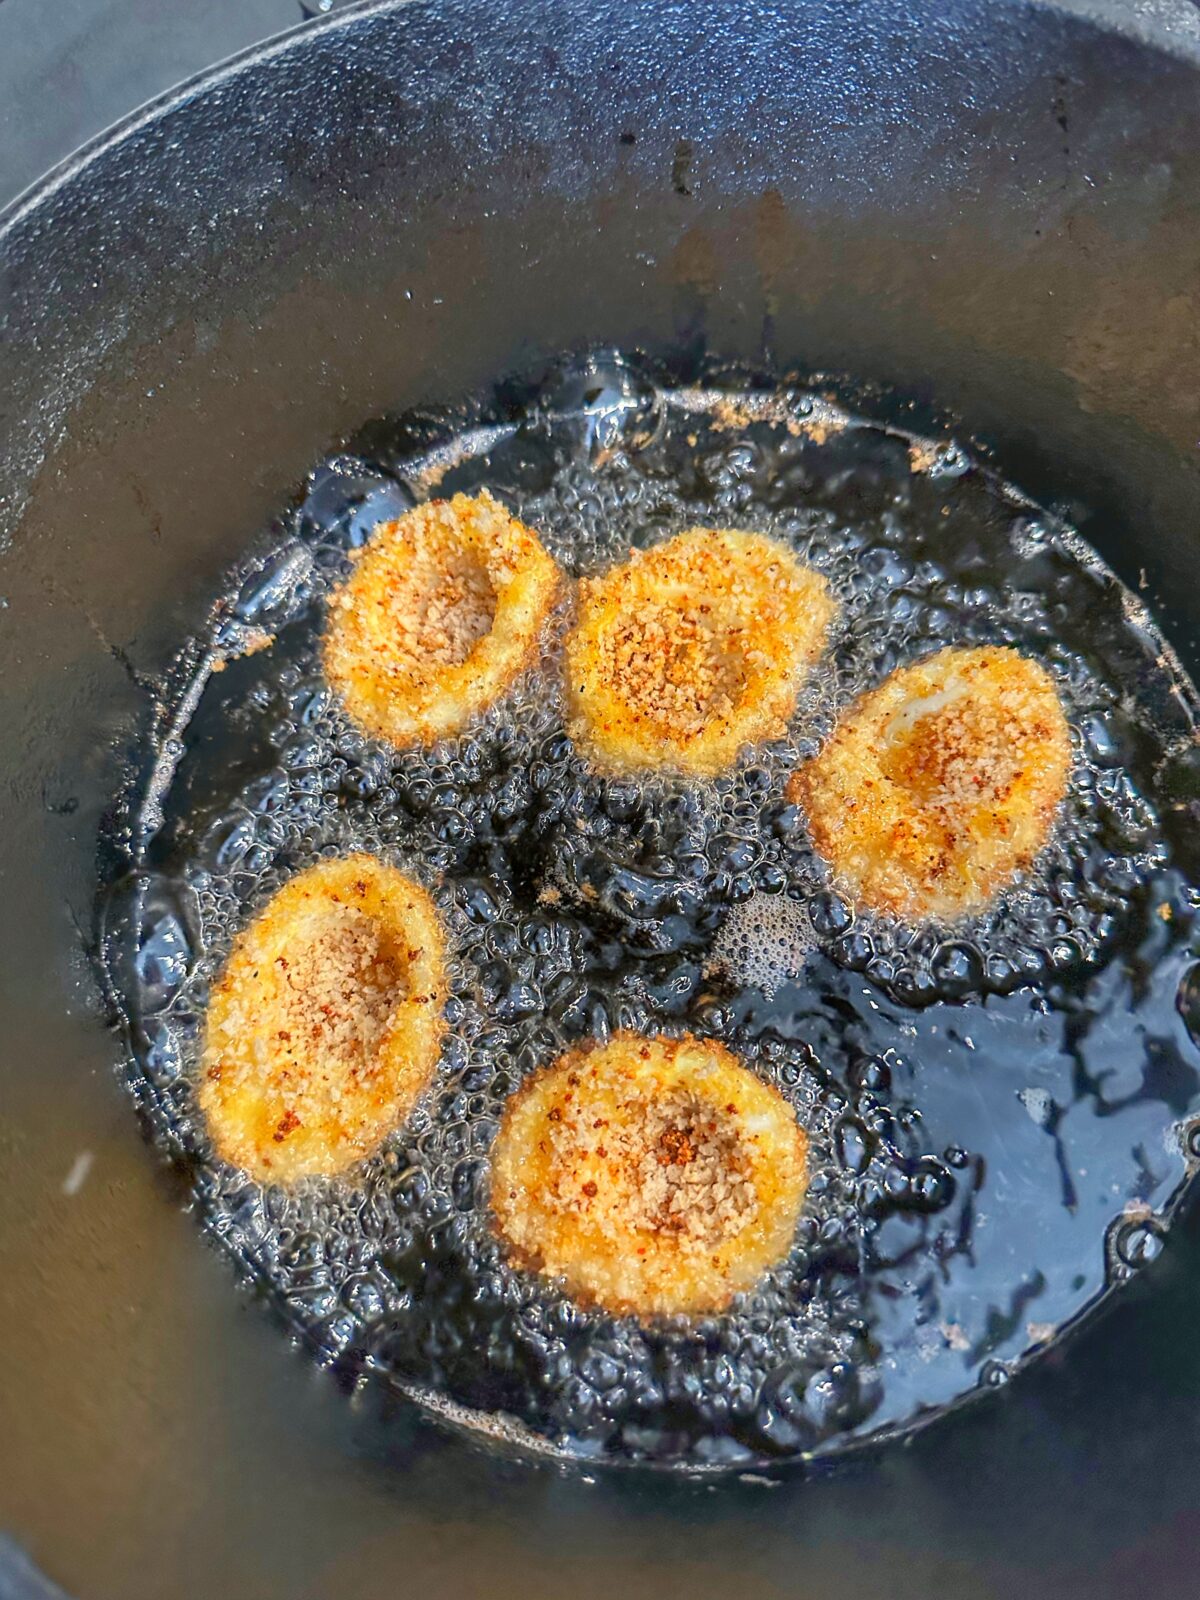 Five egg halves frying in a cast iron pot.